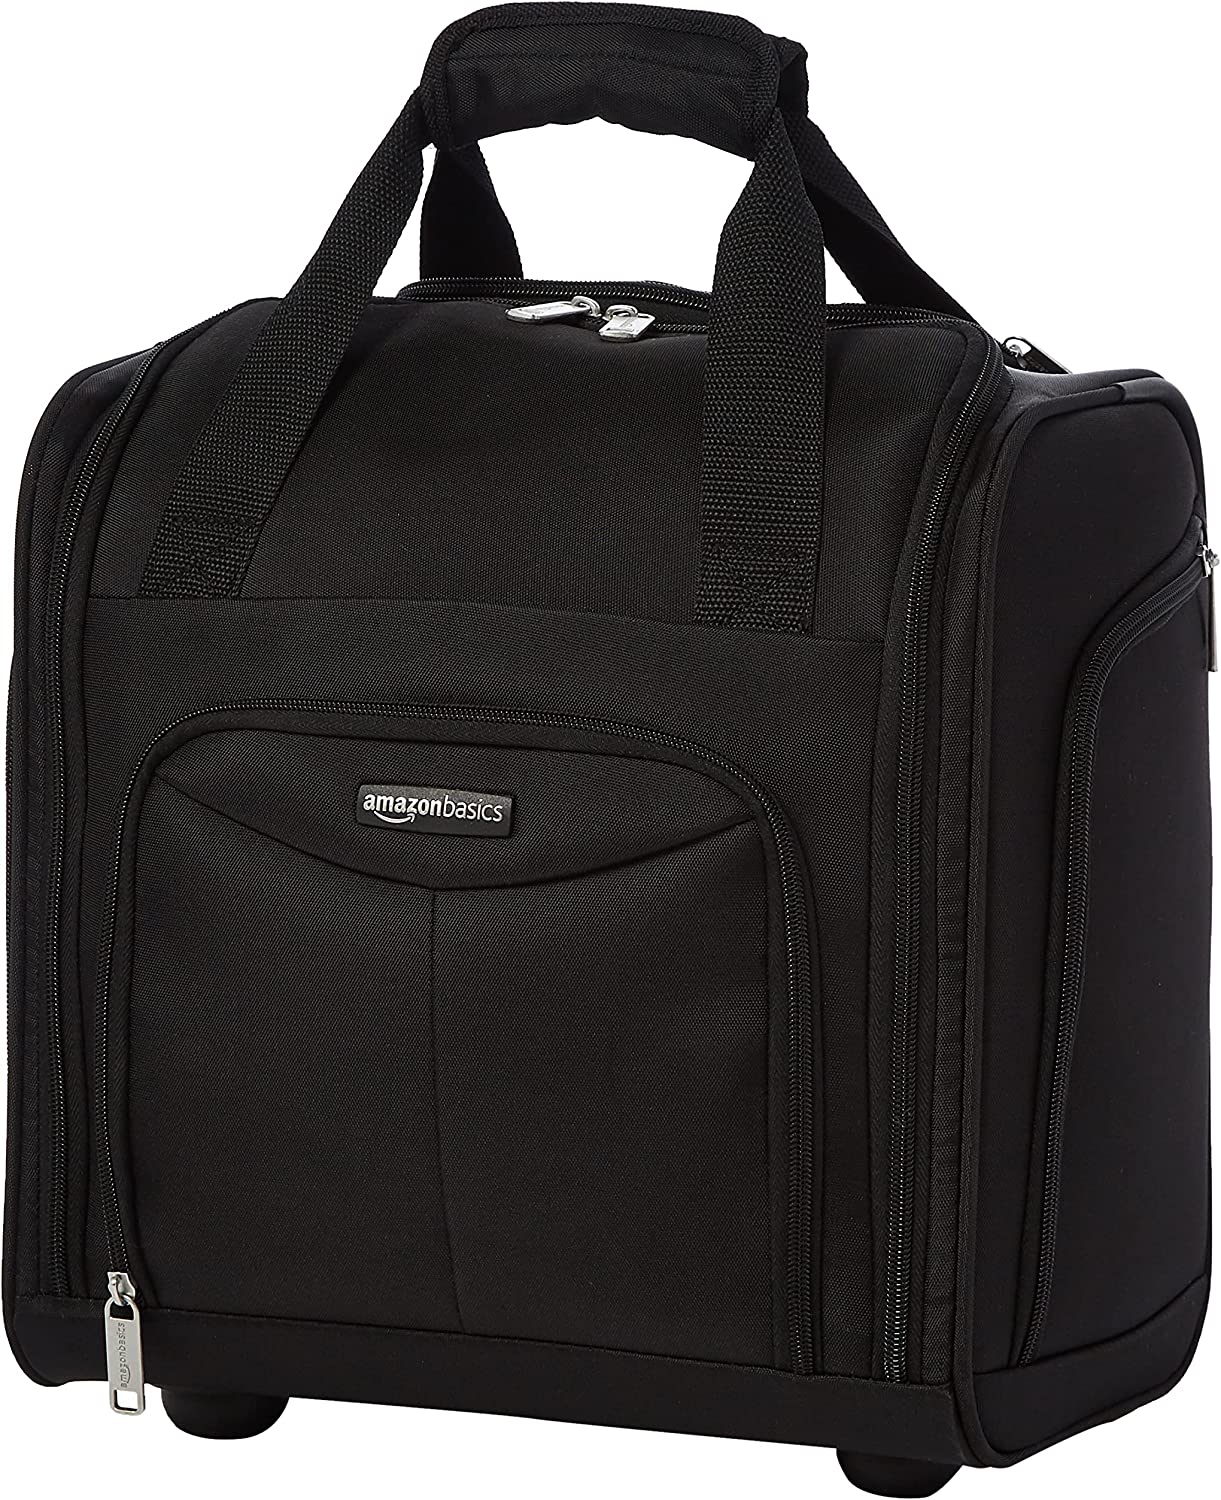 AmazonBasics Professional Adjustable Roller Bag